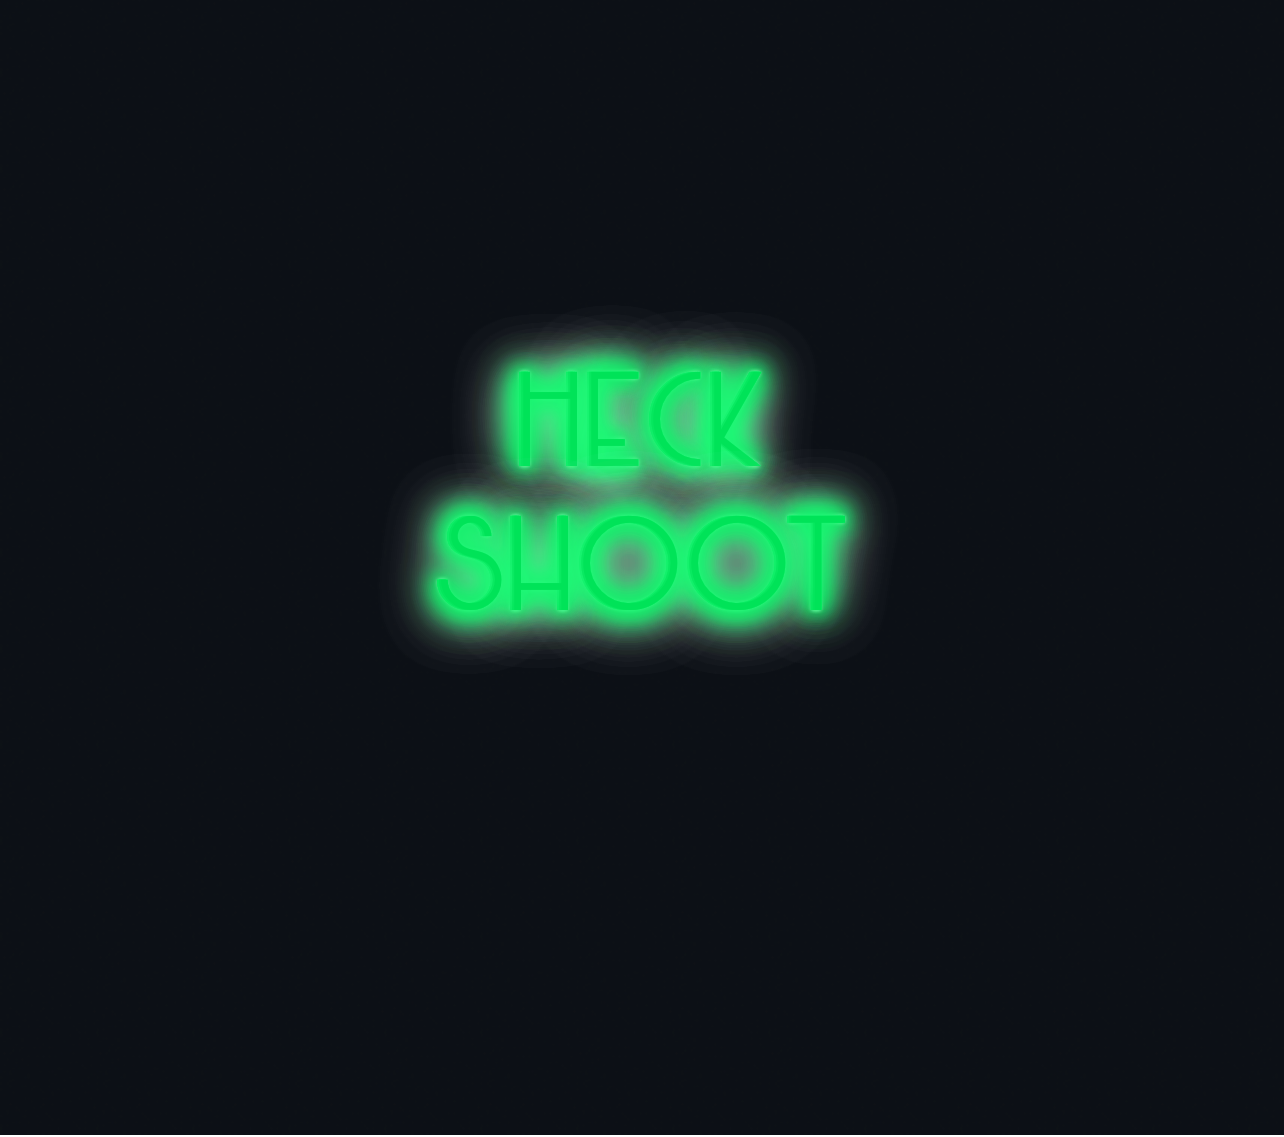 Custom neon sign - Heck Shoot